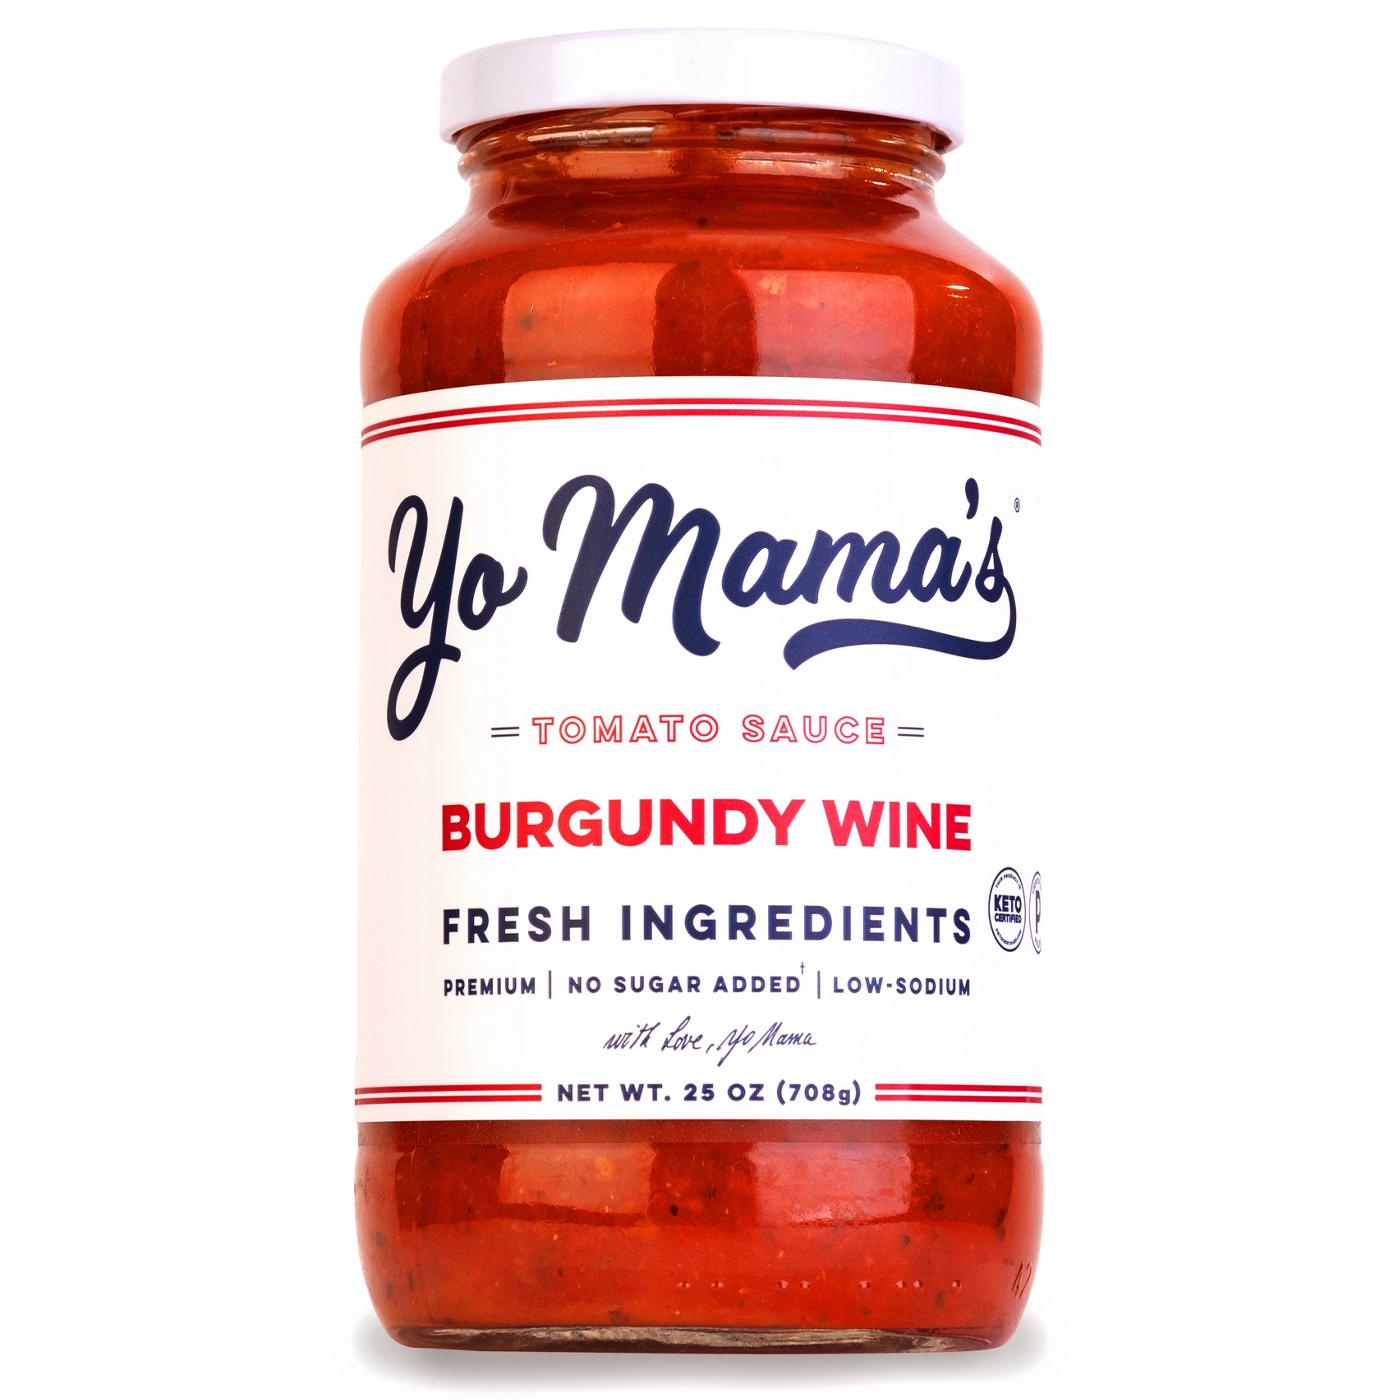 Yo Mama's Burgundy Wine Tomato Sauce; image 1 of 8